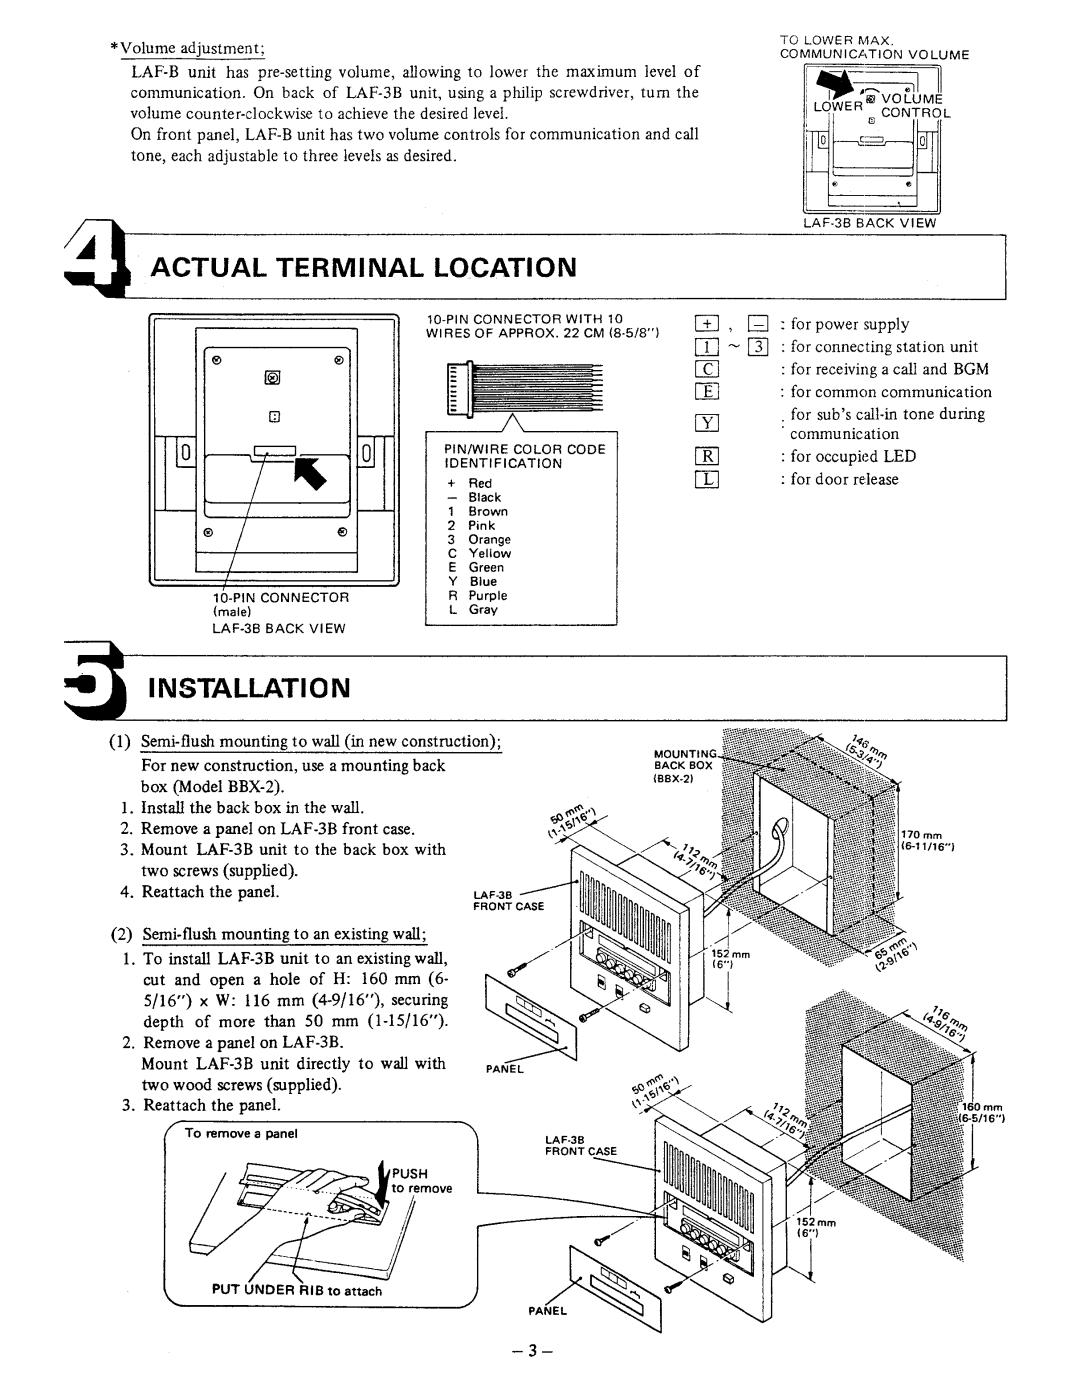 Aiphone LAF-3B manual 